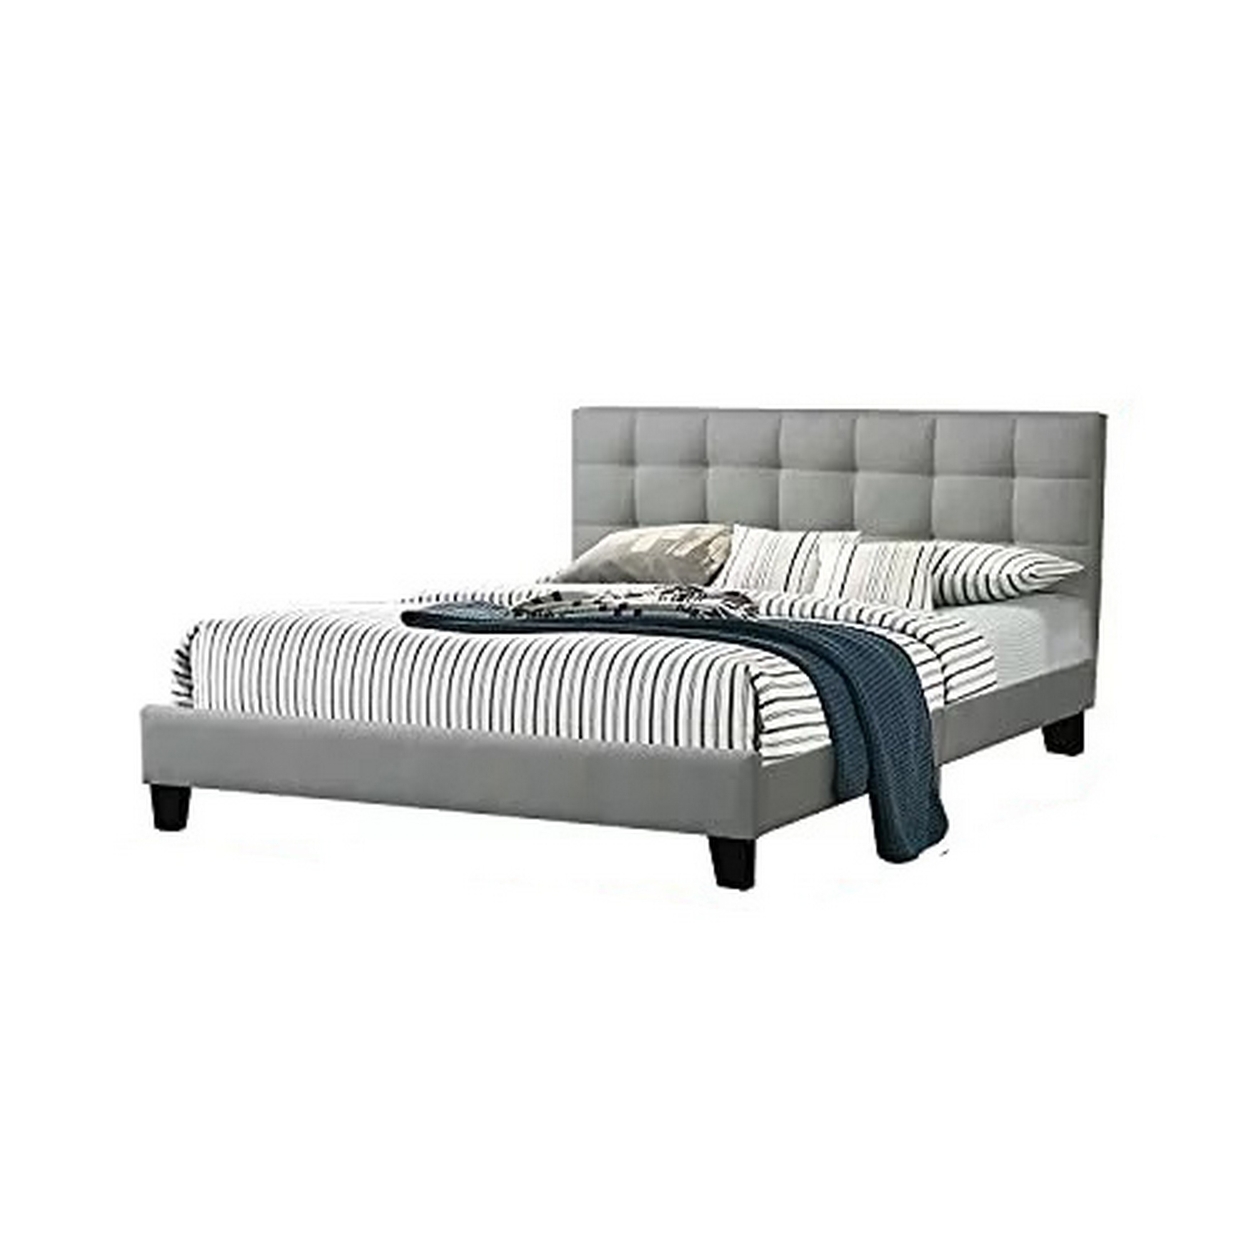 Dex Modern Platform King Size Bed, Plush Tufted Upholstery, Light Gray- Saltoro Sherpi